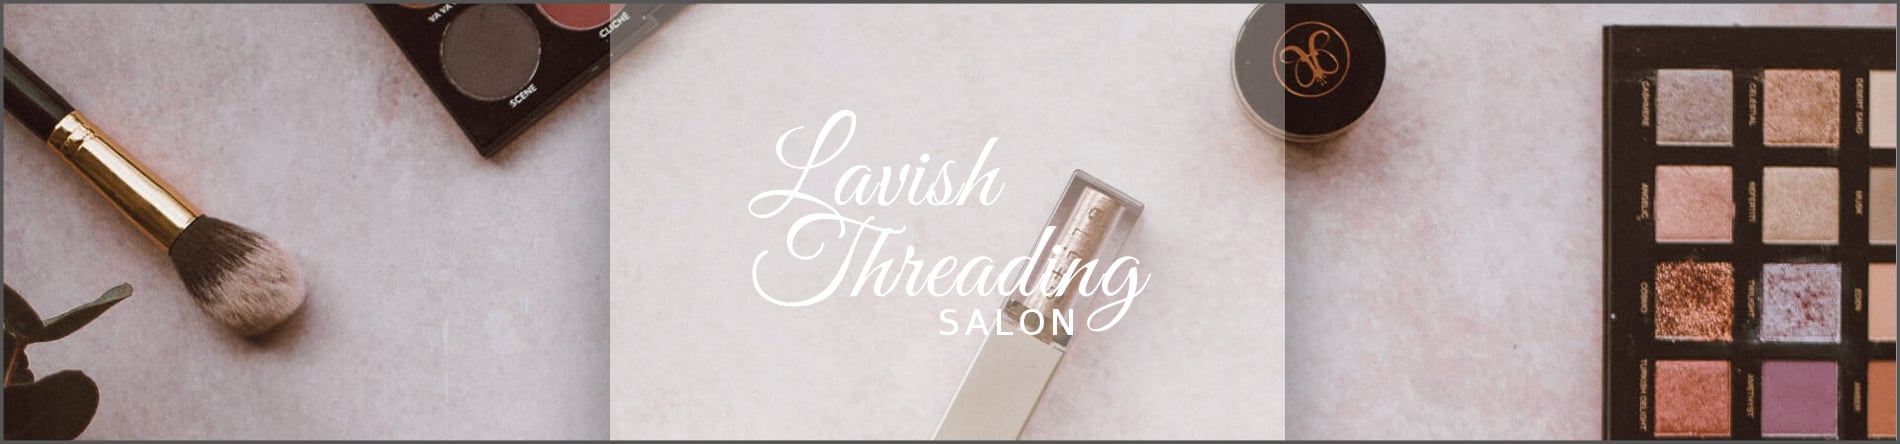 Lavish Threading Salon